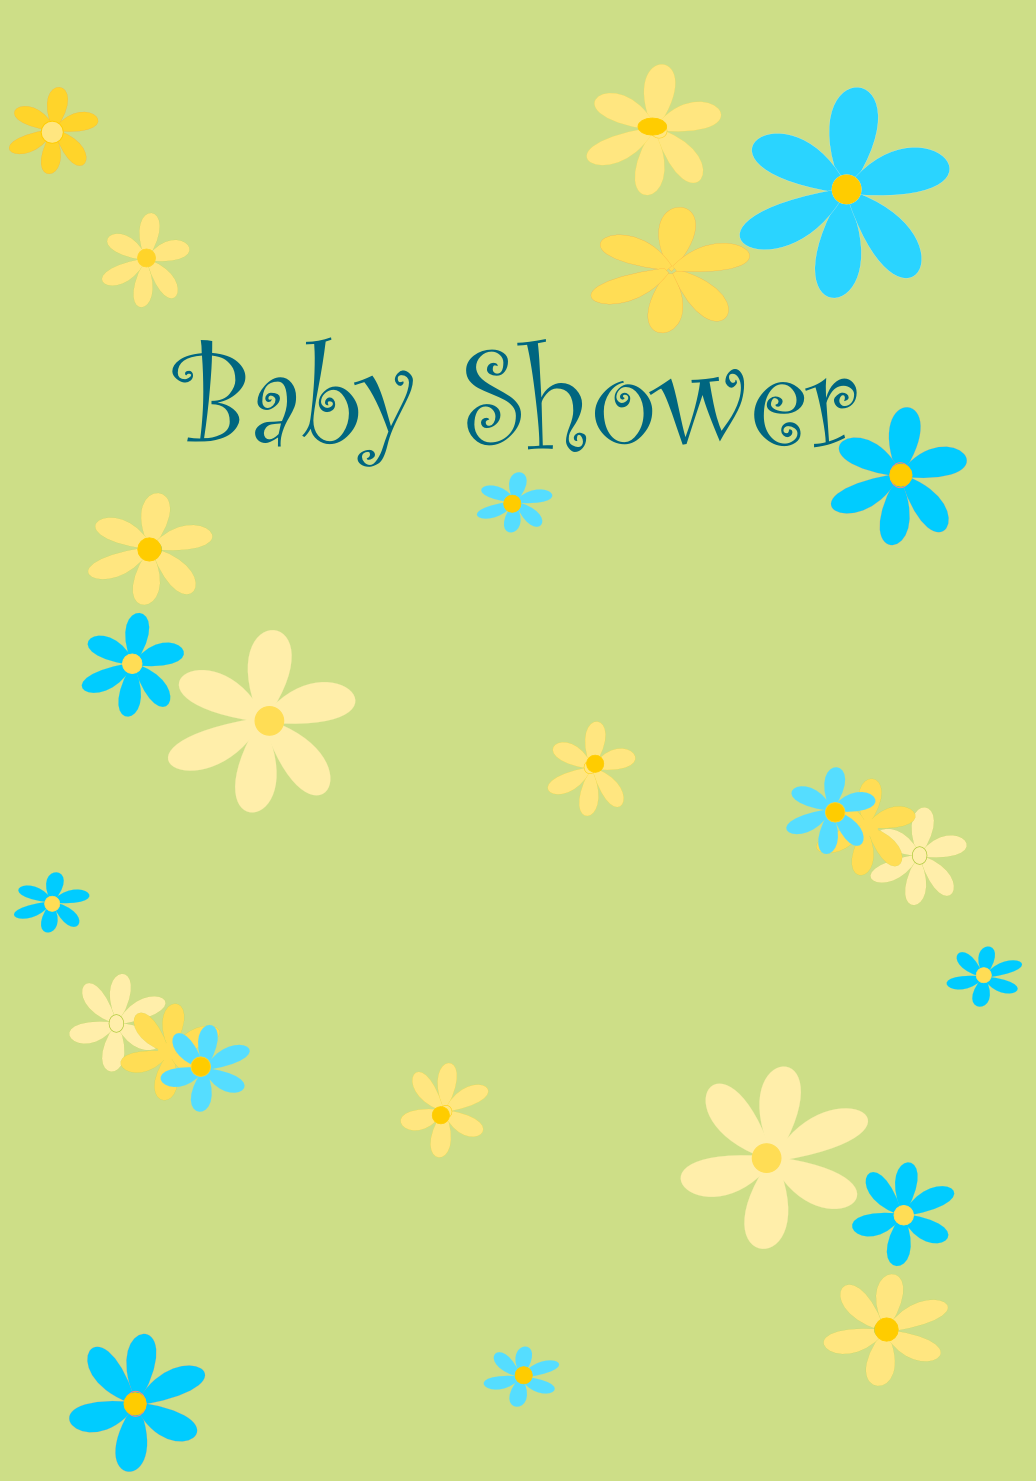 Printable Birthday Cards Printable Baby Shower Cards FEBRUARY 2020